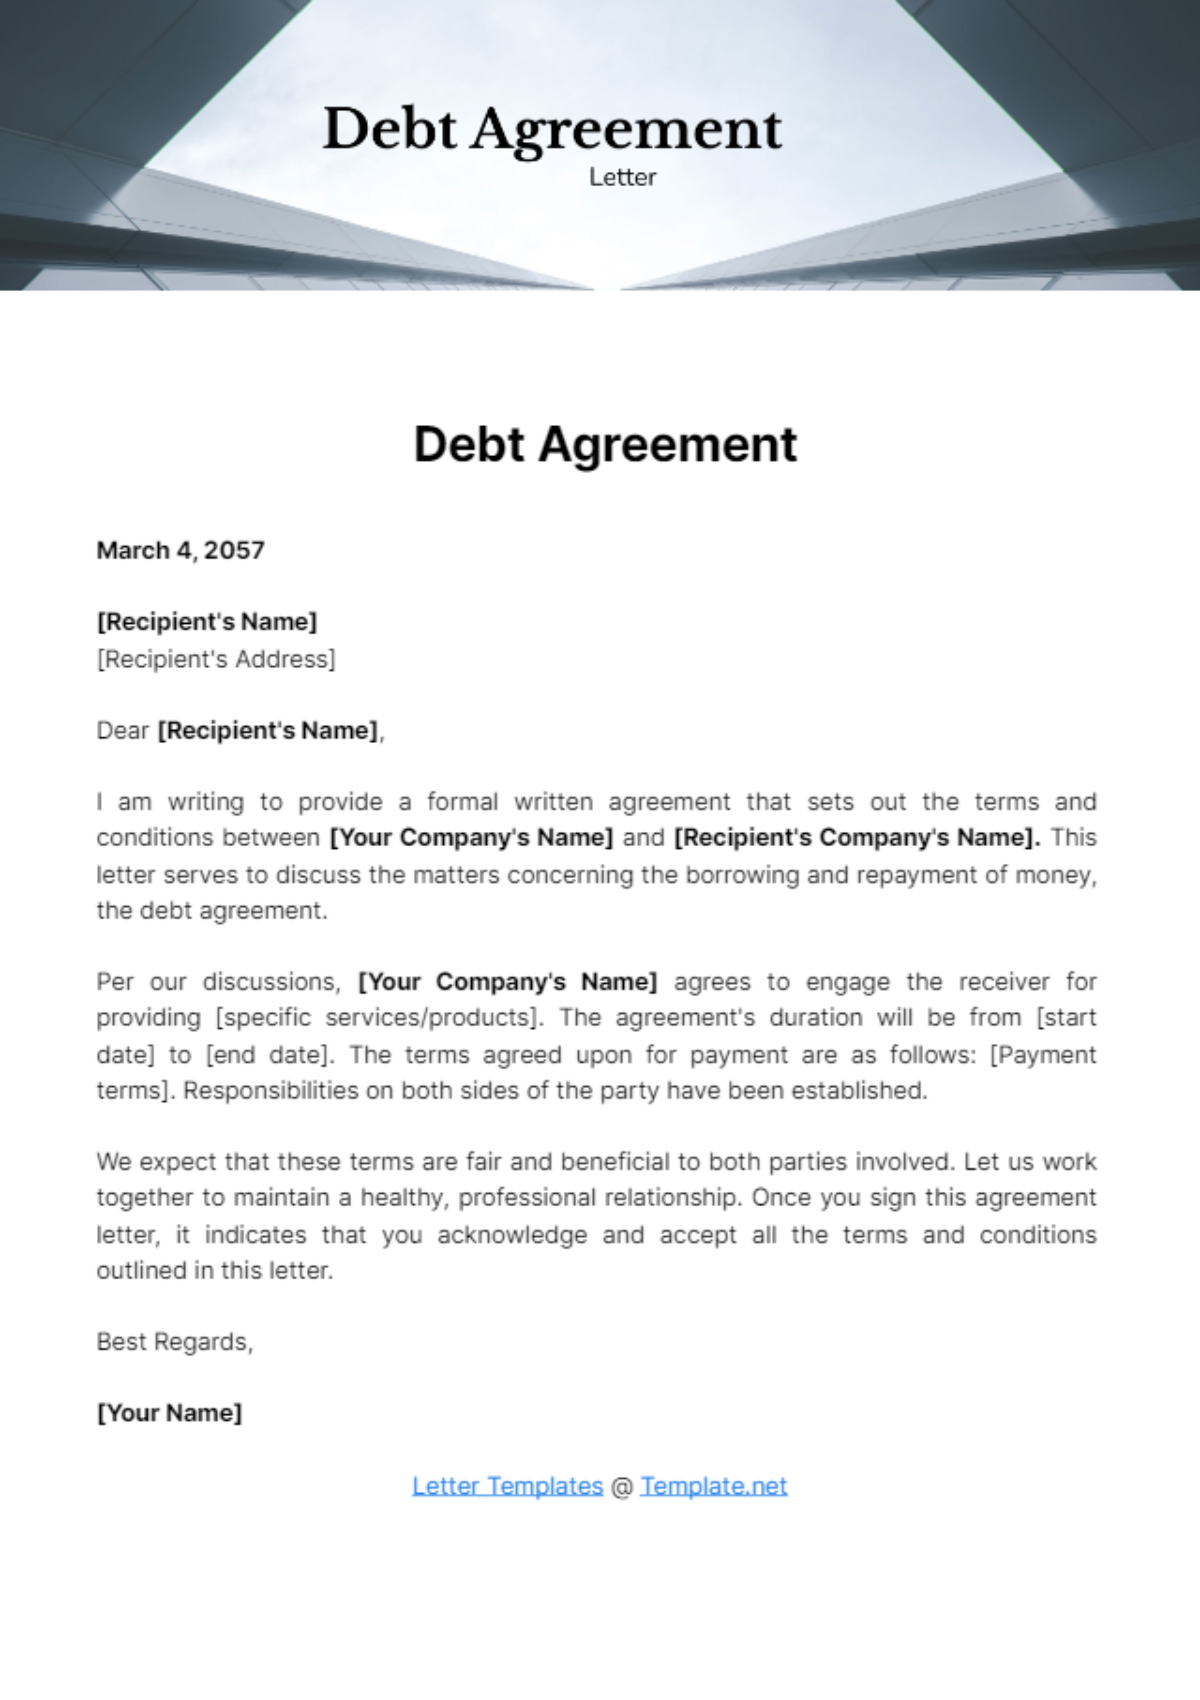 Debt Agreement Letter Template